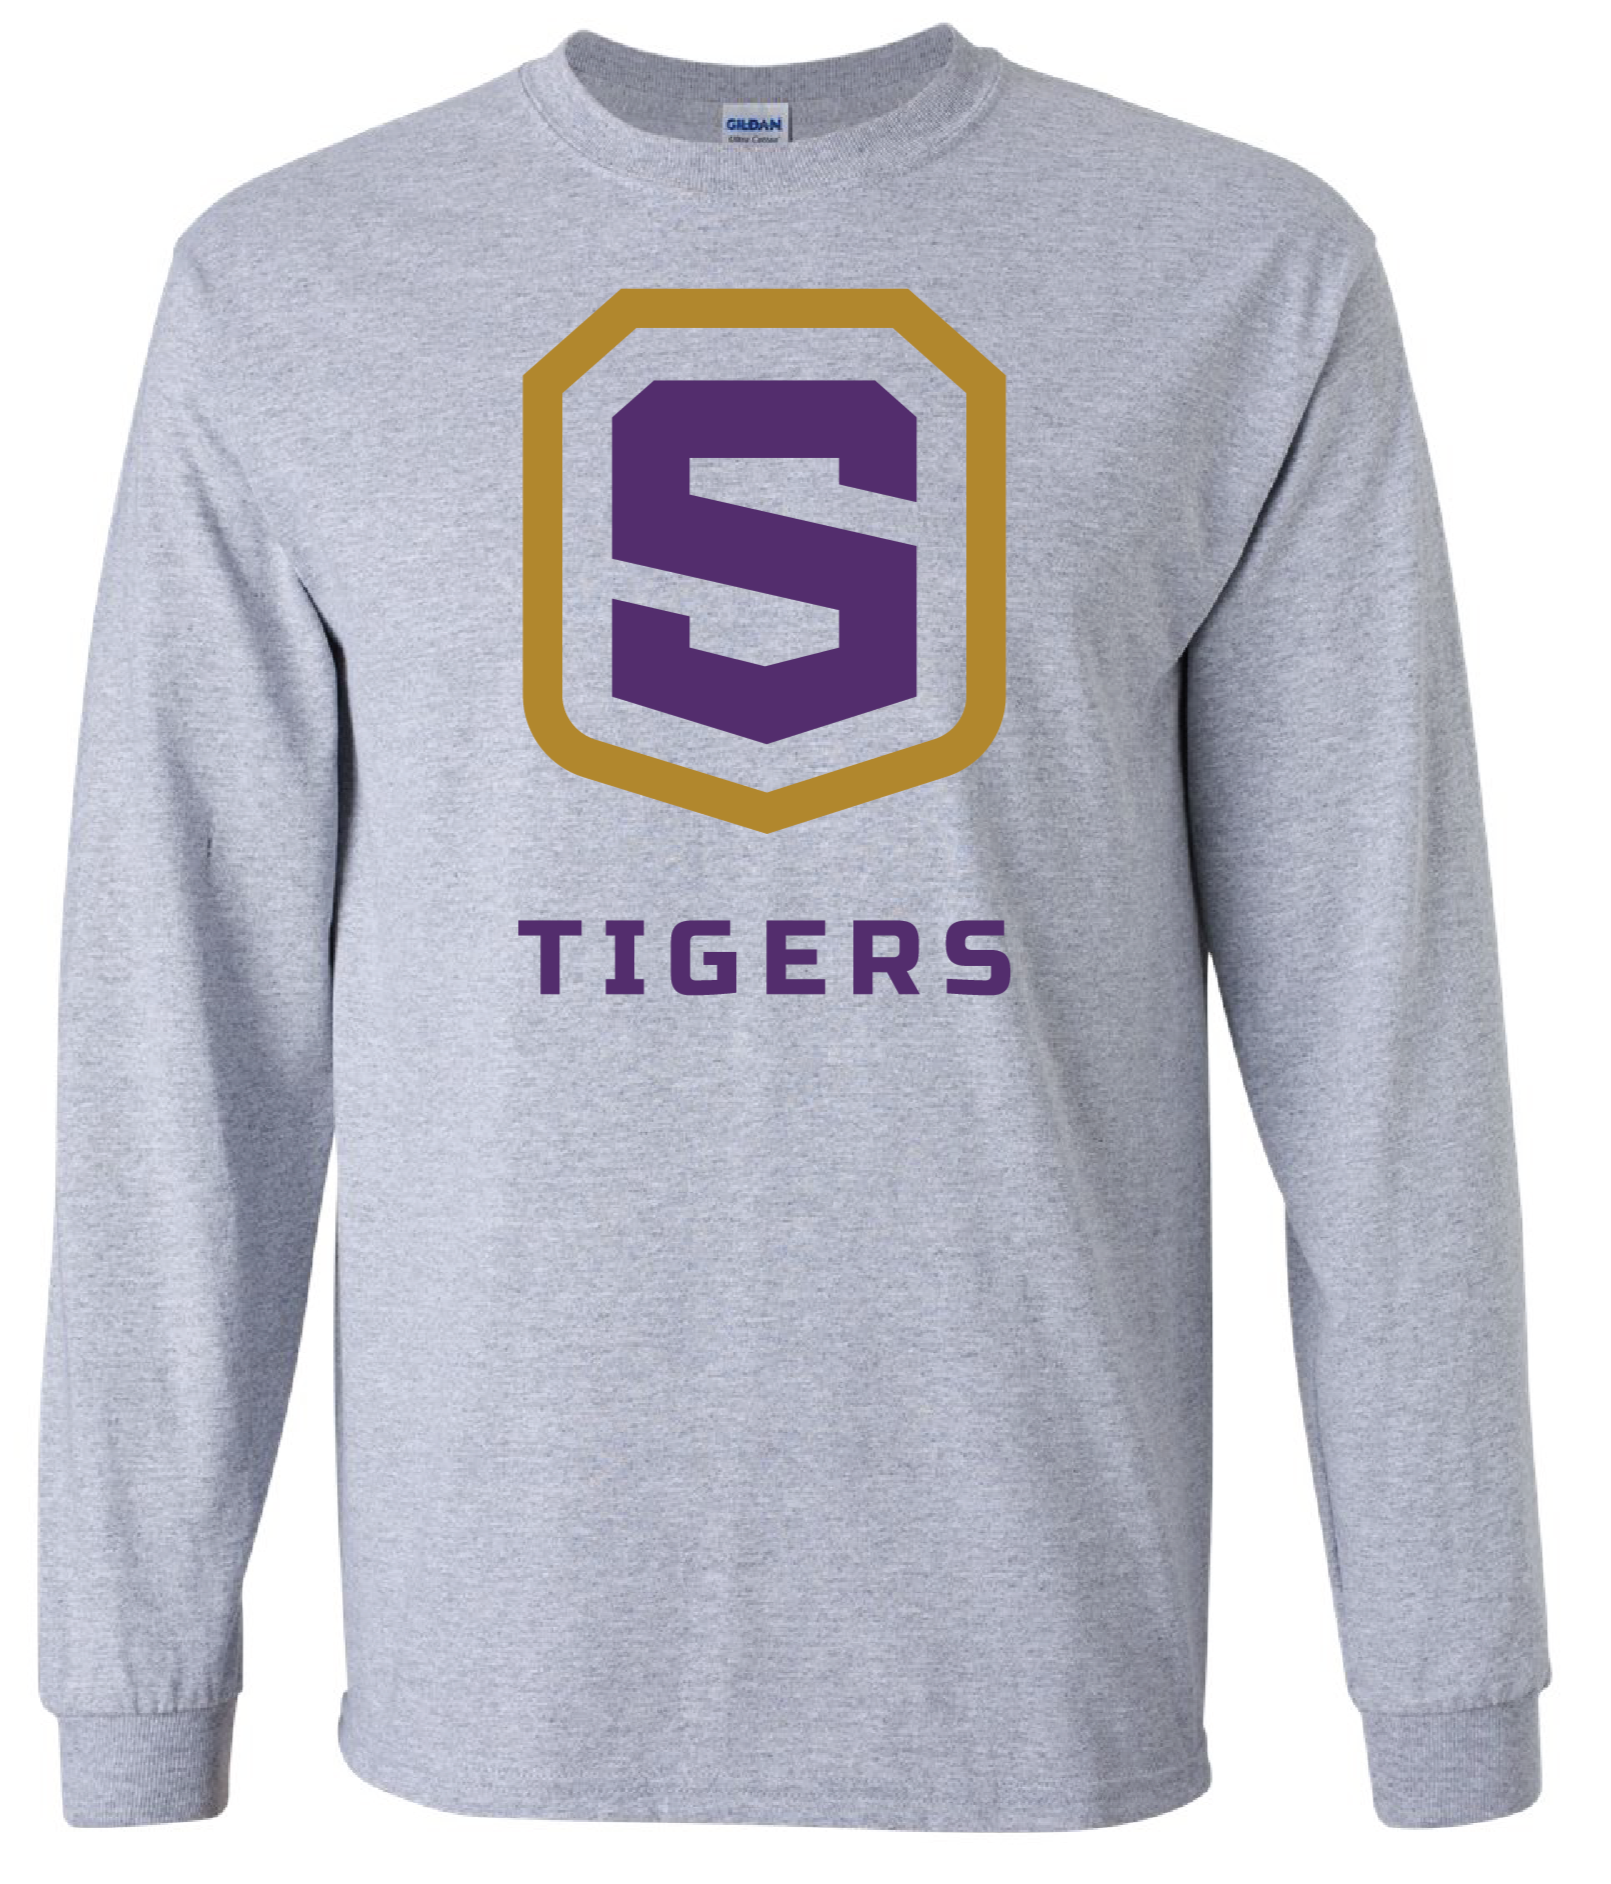 Adult Long Sleeve Cotton Shirt | Tigers Shield